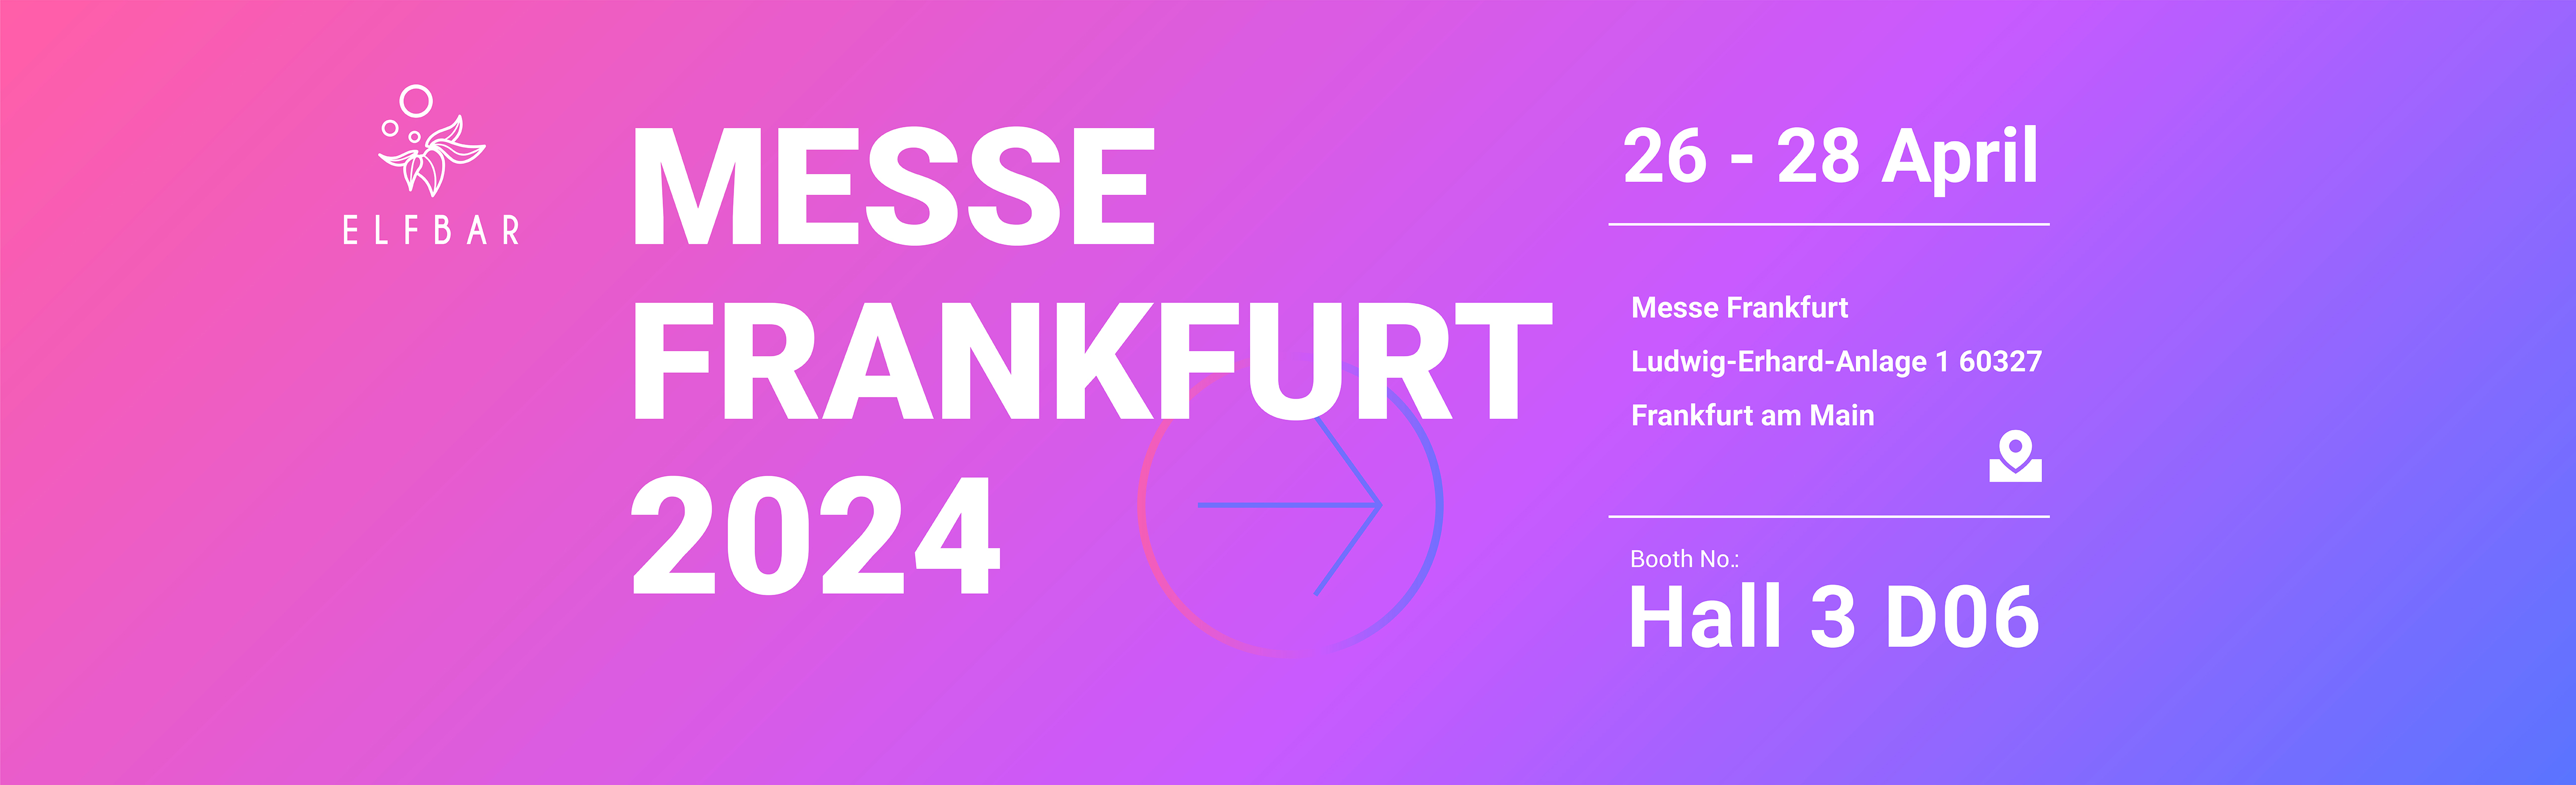 Messe Frankfurt 2024